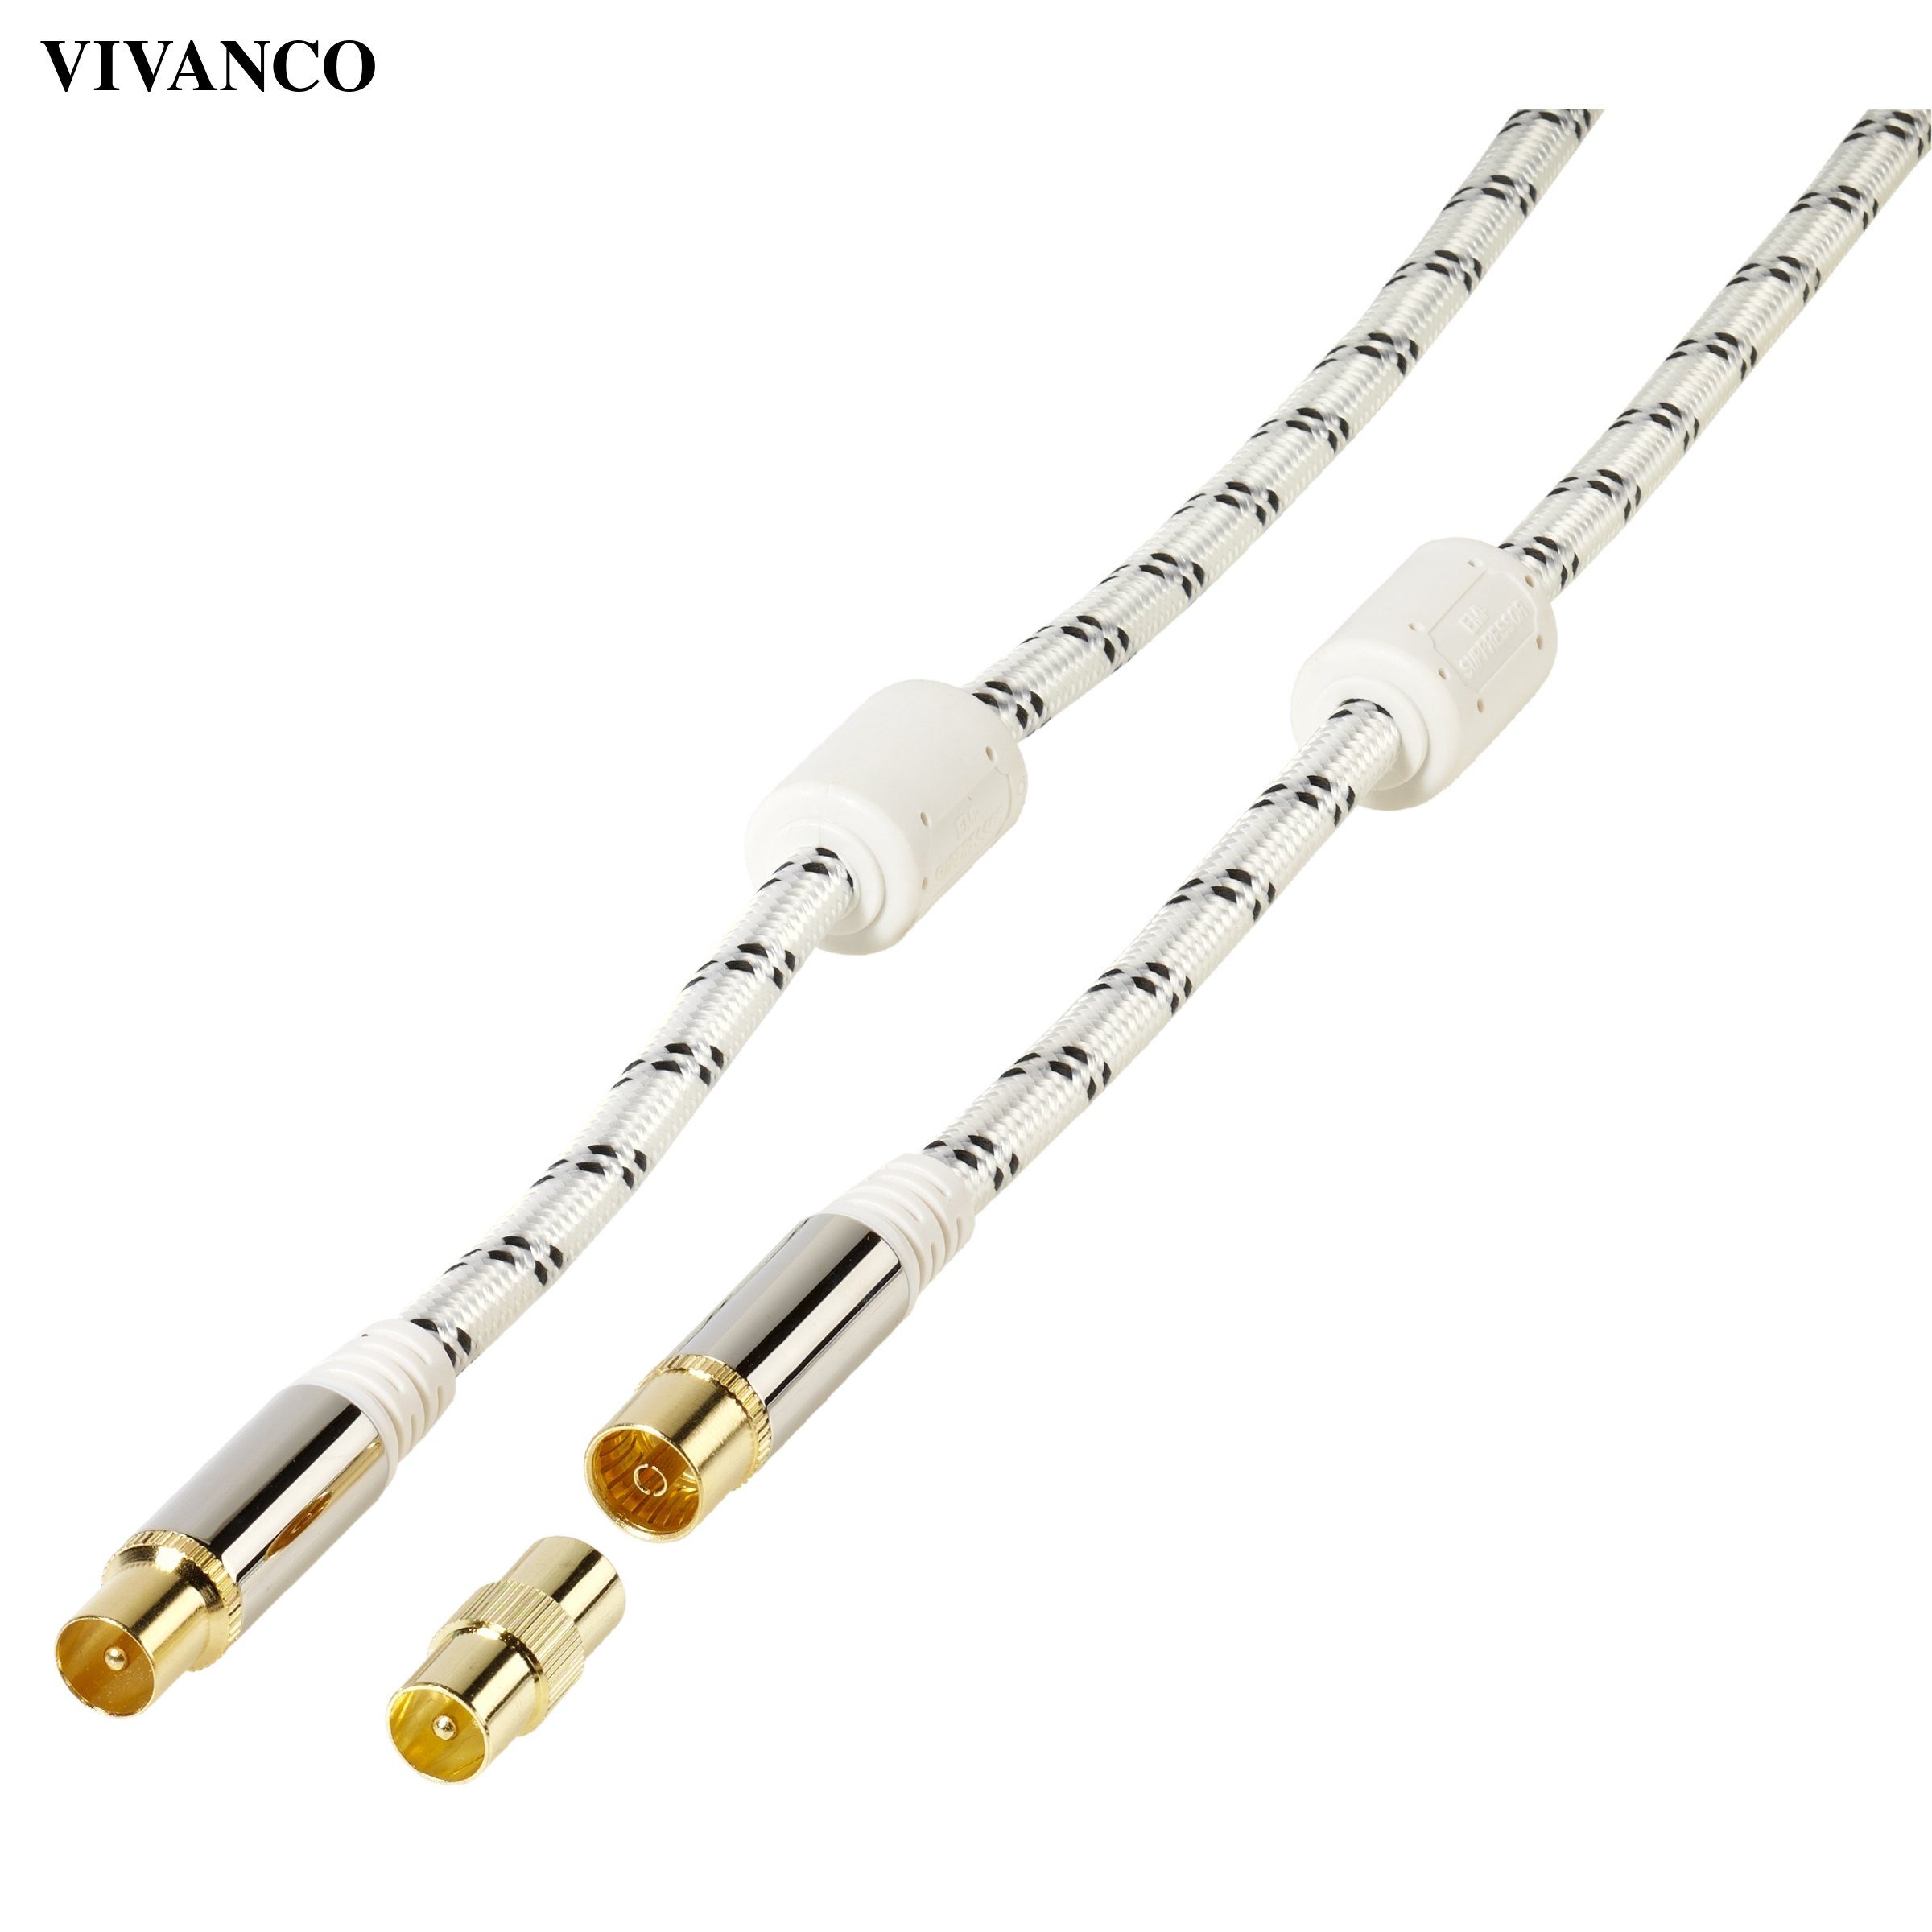 Vivanco Video-Kabel, Antennenkabel, vergoldet, 120dB